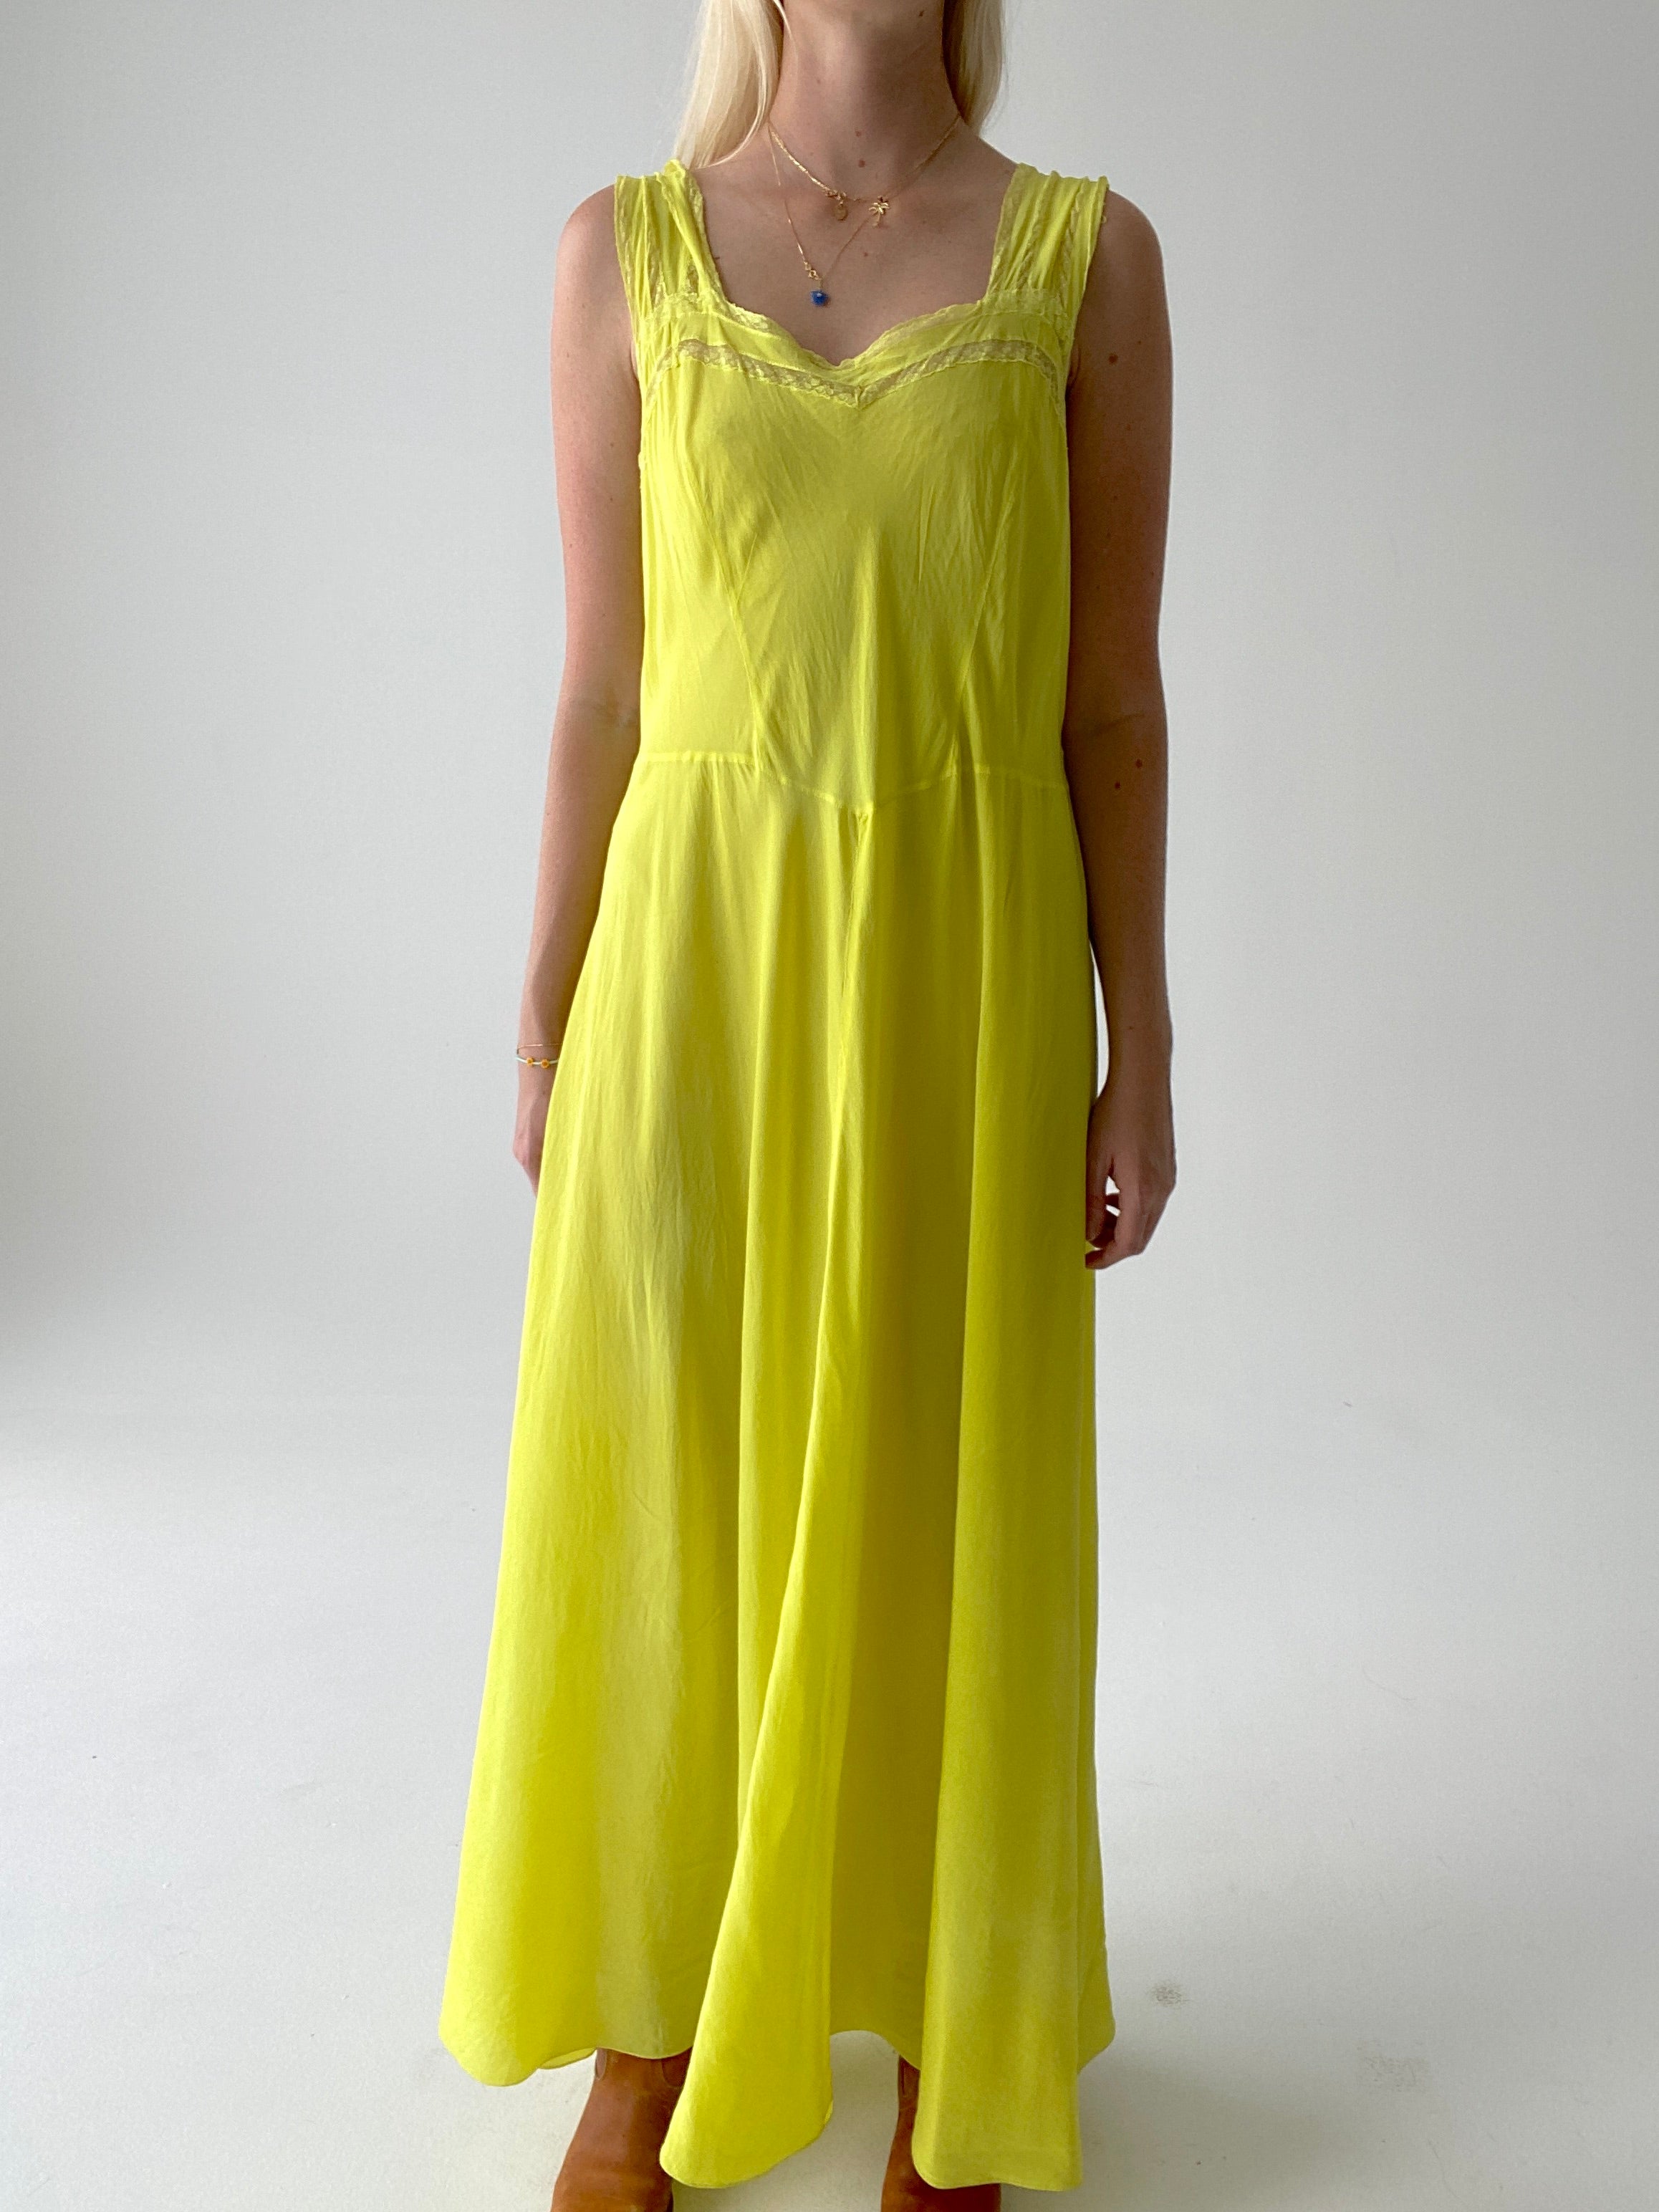 Hand Dyed Bright Yellow Silk Dress